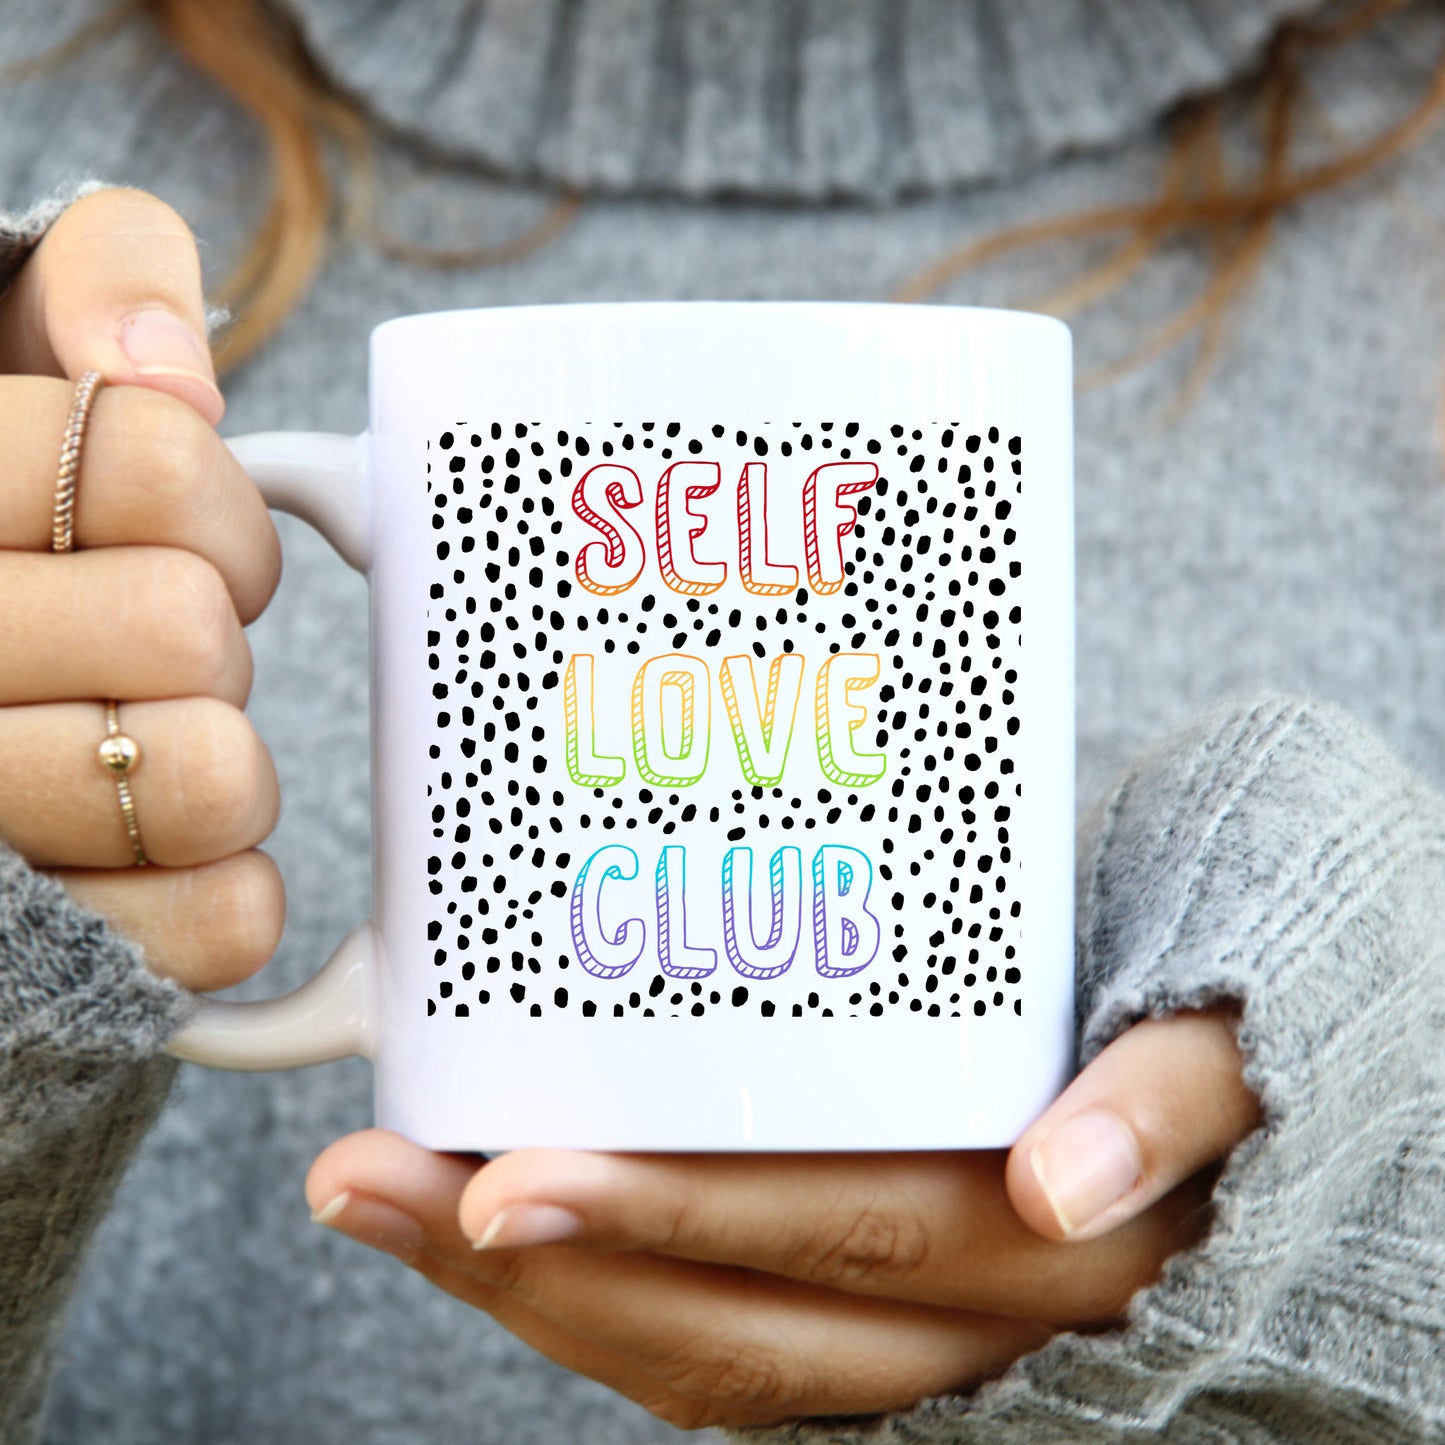 self-love-club-mug